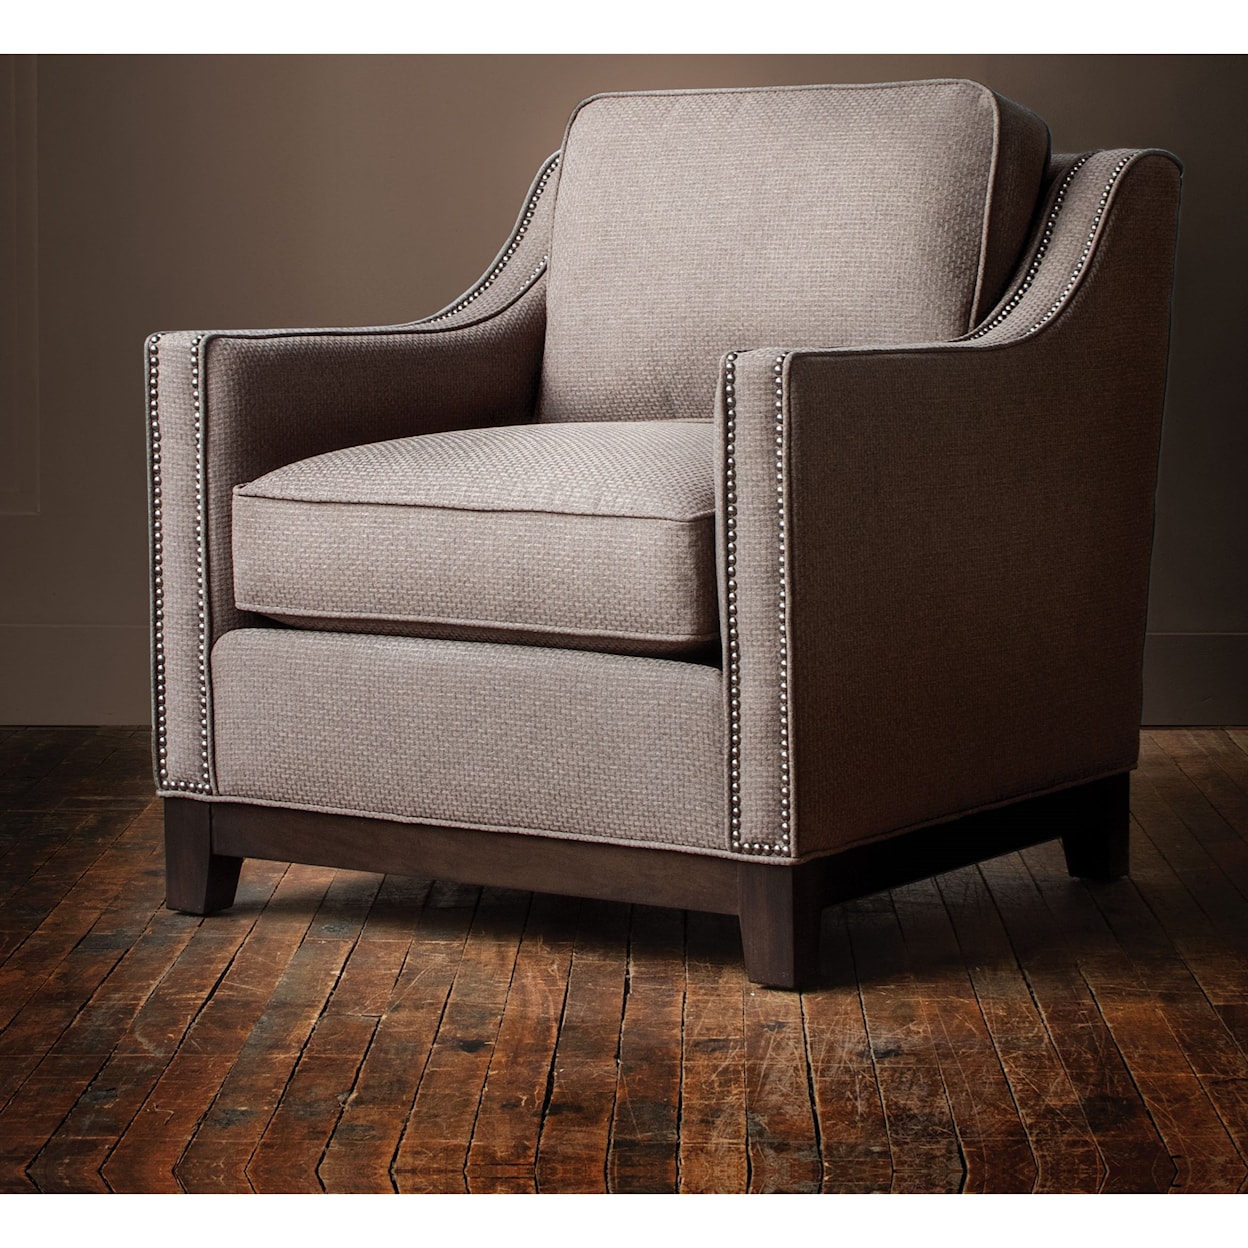 Hallagan Furniture Brighton Customizable Sloped Arm Chair